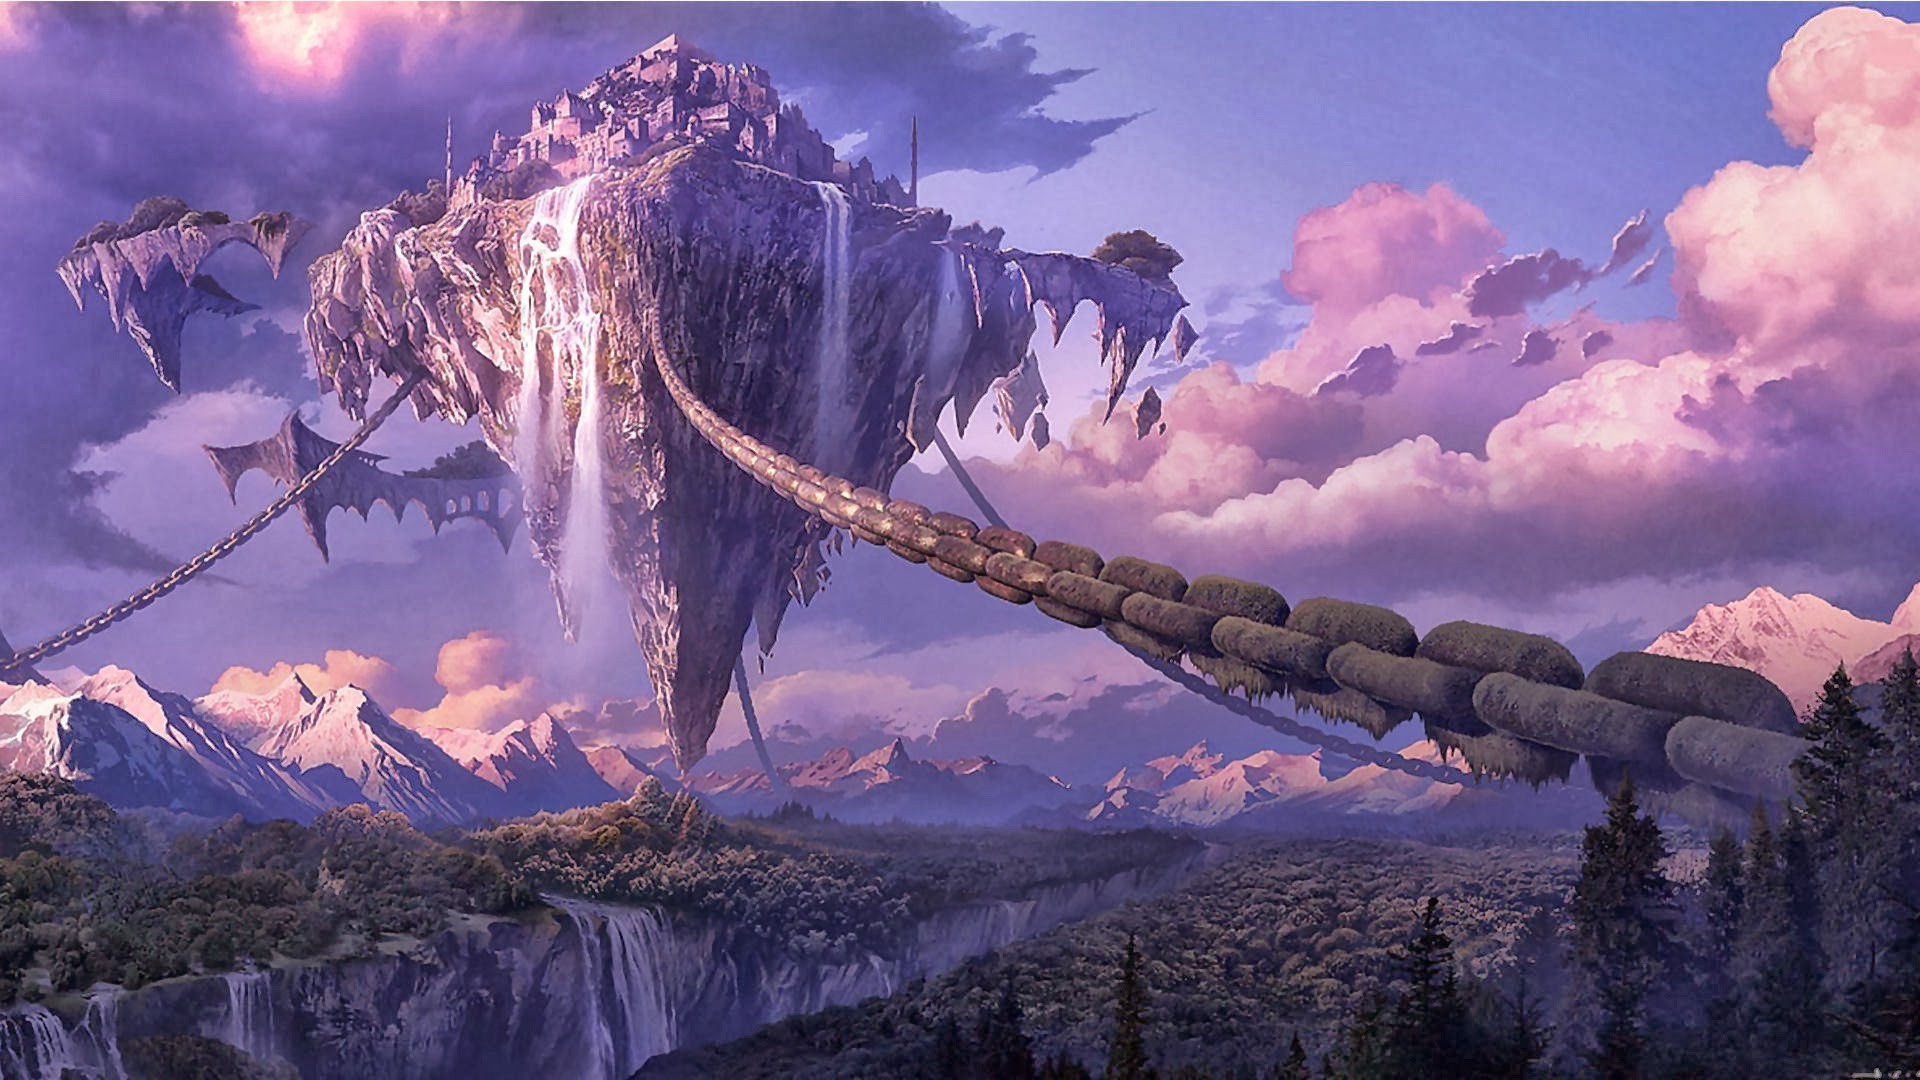 fantasy Art, Artwork, Digital Art, Chains, Waterfall, Forest, Clouds, Mountain, Floating Island Wallpaper